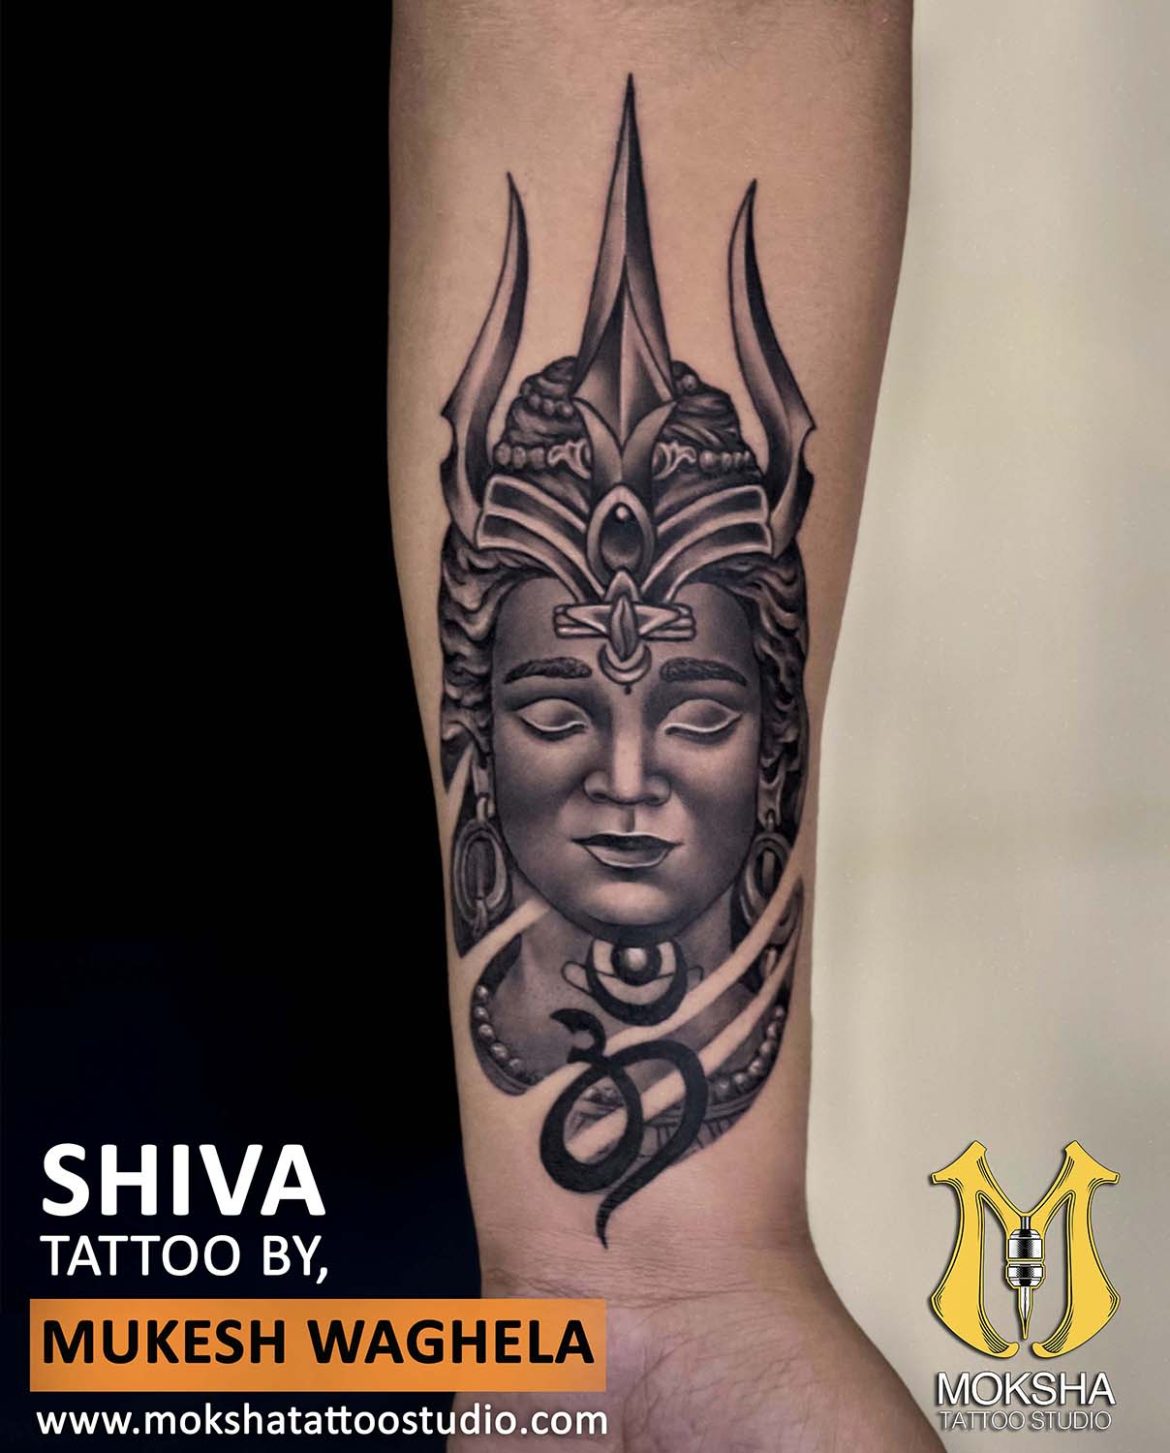 trishul Mokshatattoostudio - Best Tattoo Artist in Goa Safe, Hygienic #1  Best Tattoo Studio In Goa India